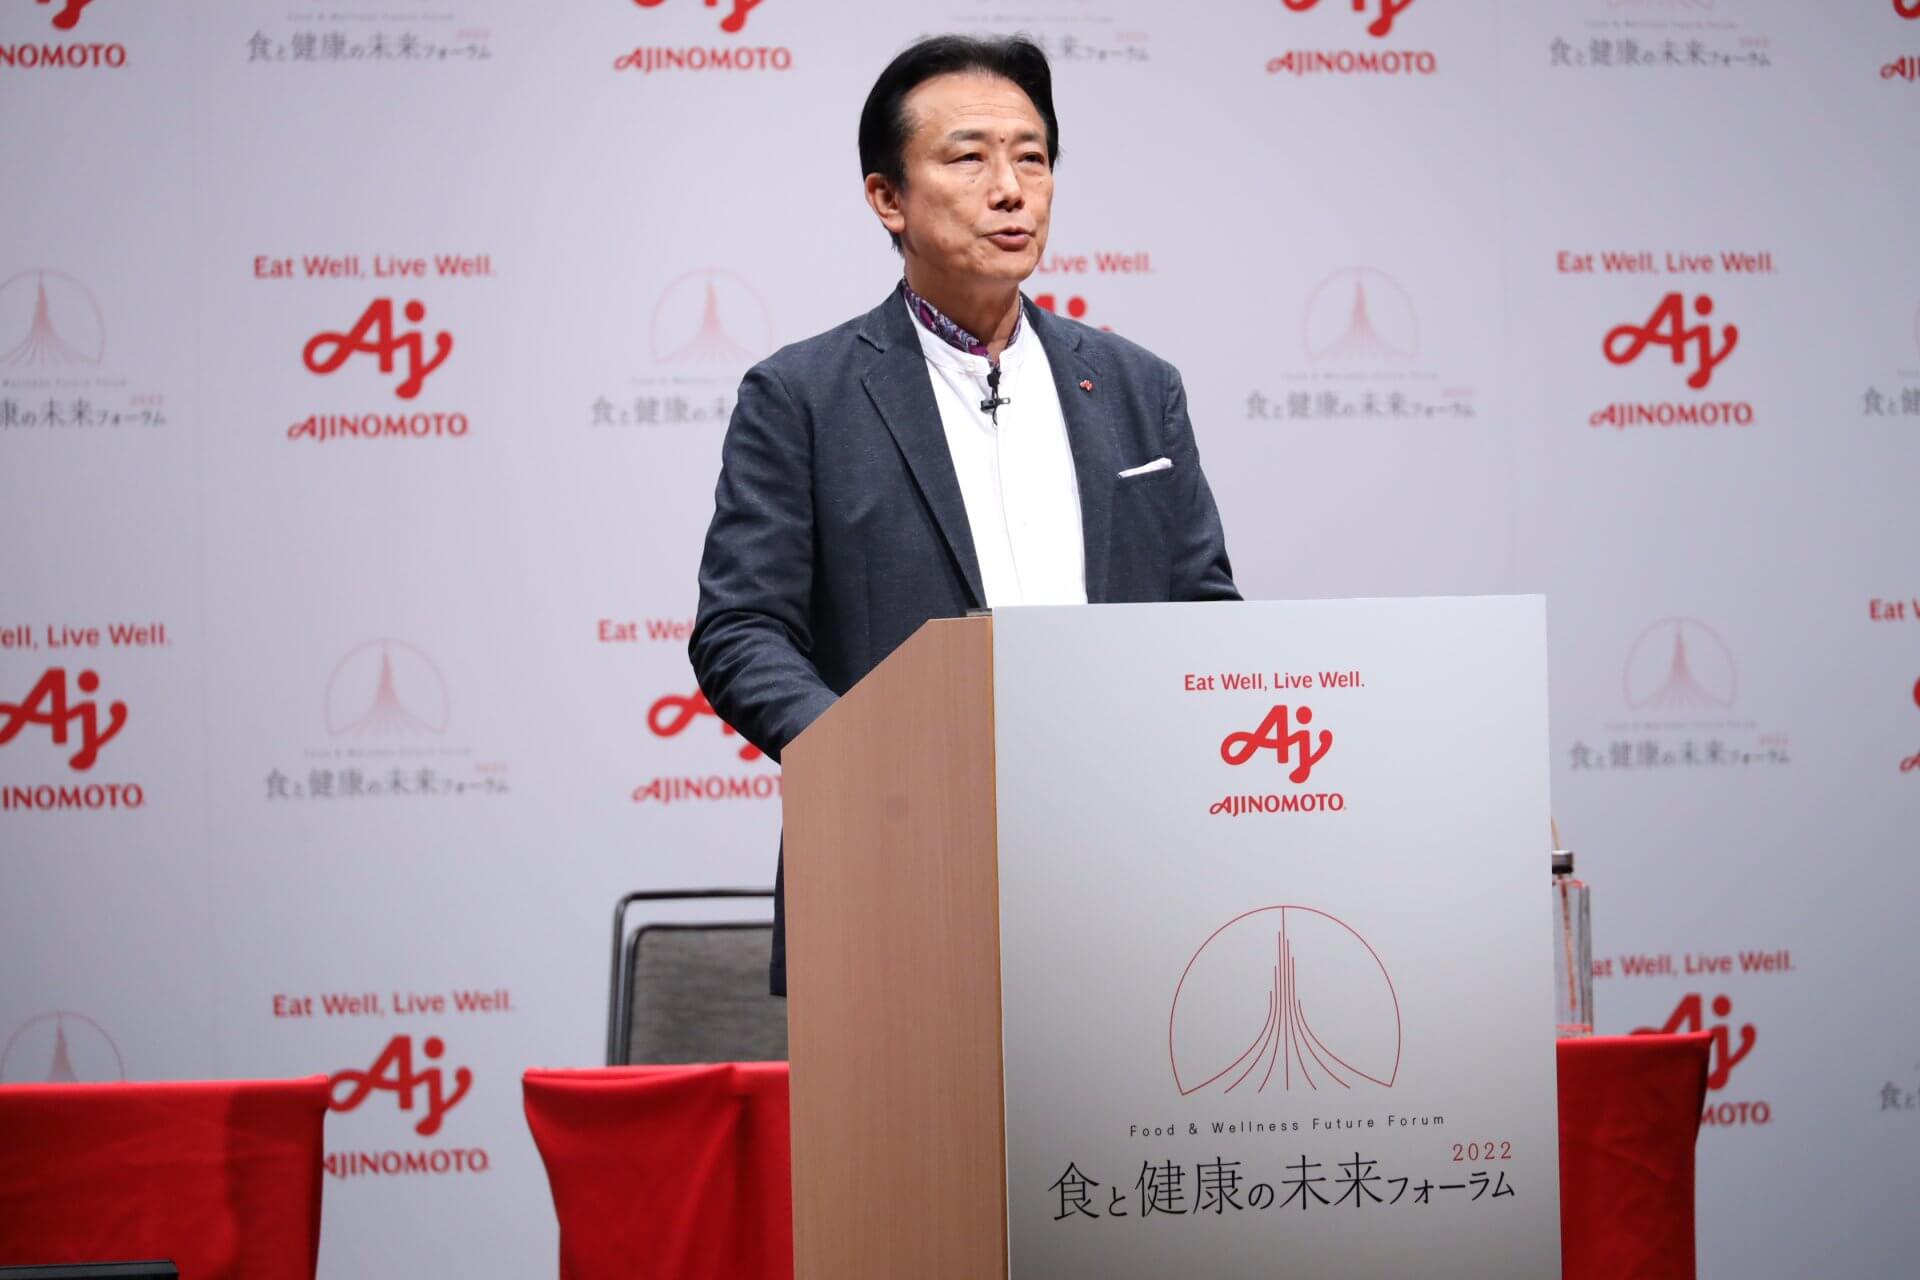 Taro Fujie ประธานและประธานเจ้าหน้าที่บริหาร (CEO) Ajinomoto Co., Inc.